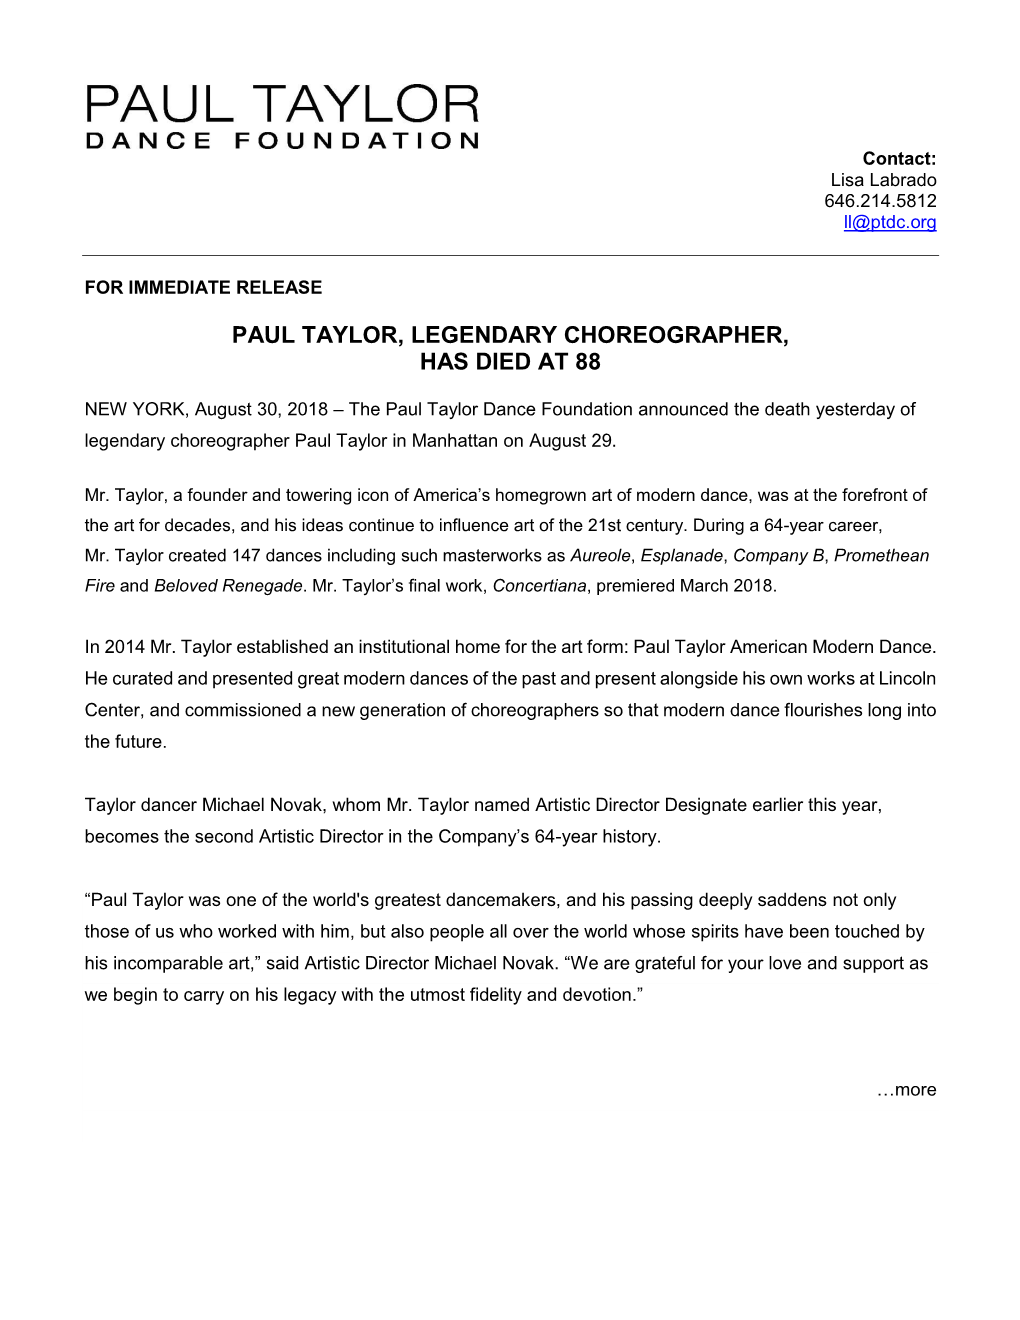 Paul Taylor, Legendary Choreographer, Has Died at 88